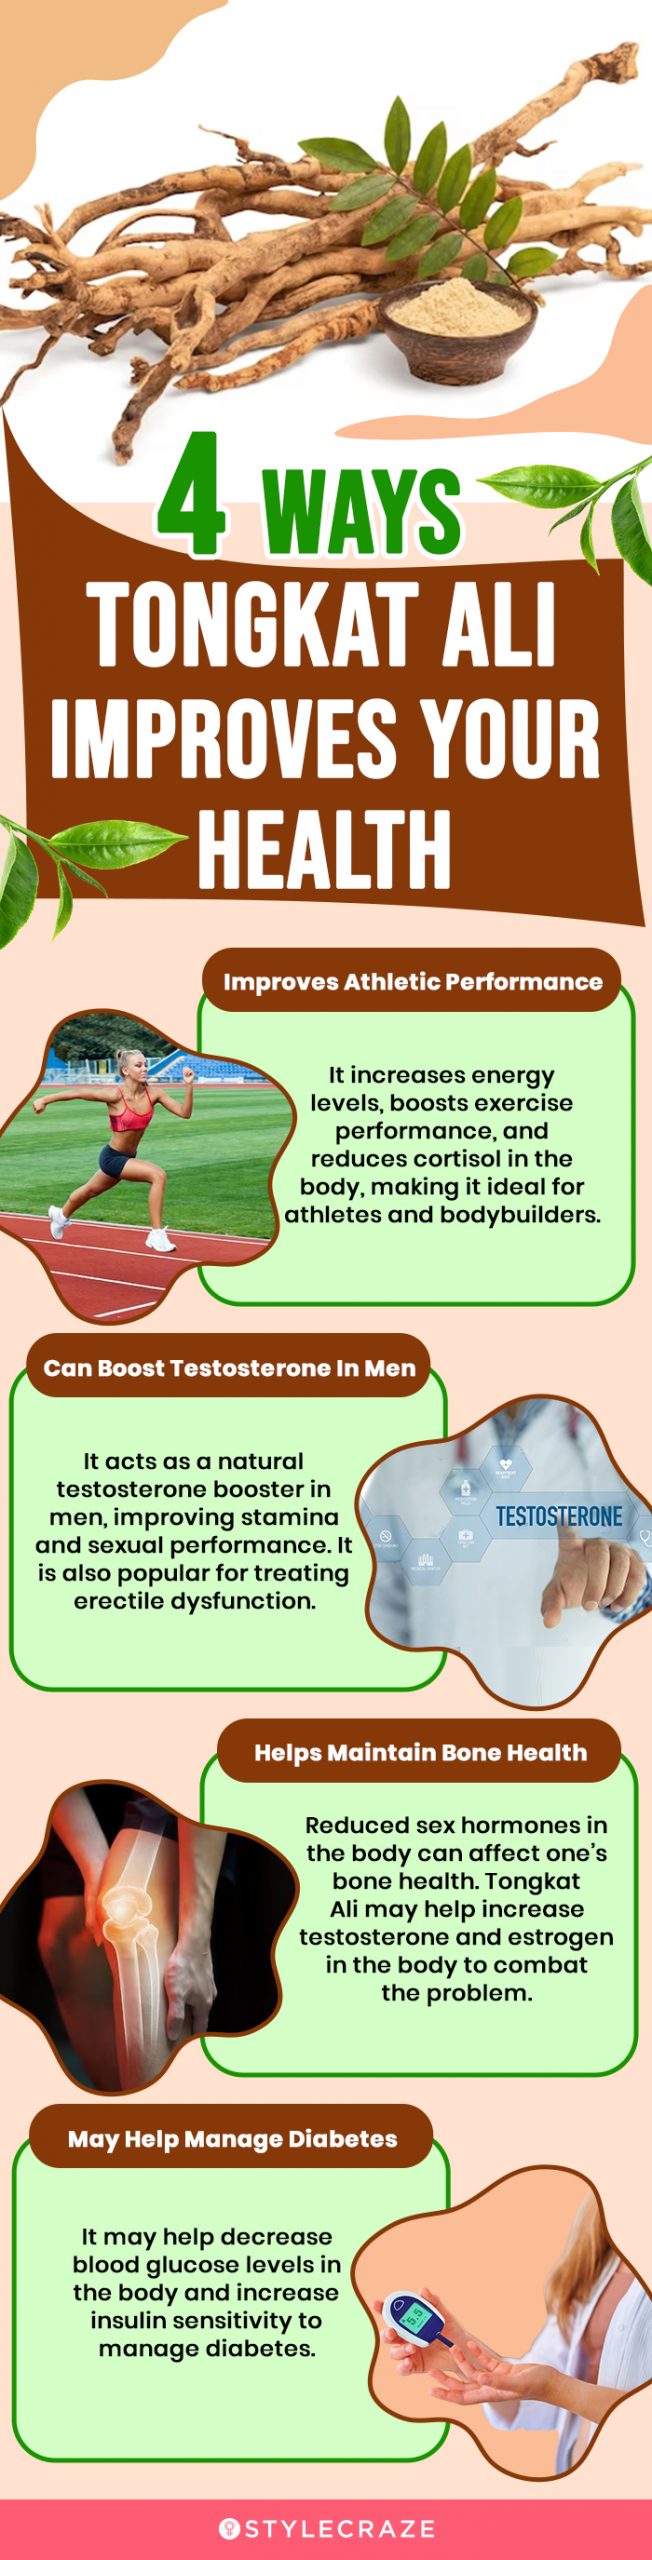 4 ways tongkat ali improves your health (infographic)